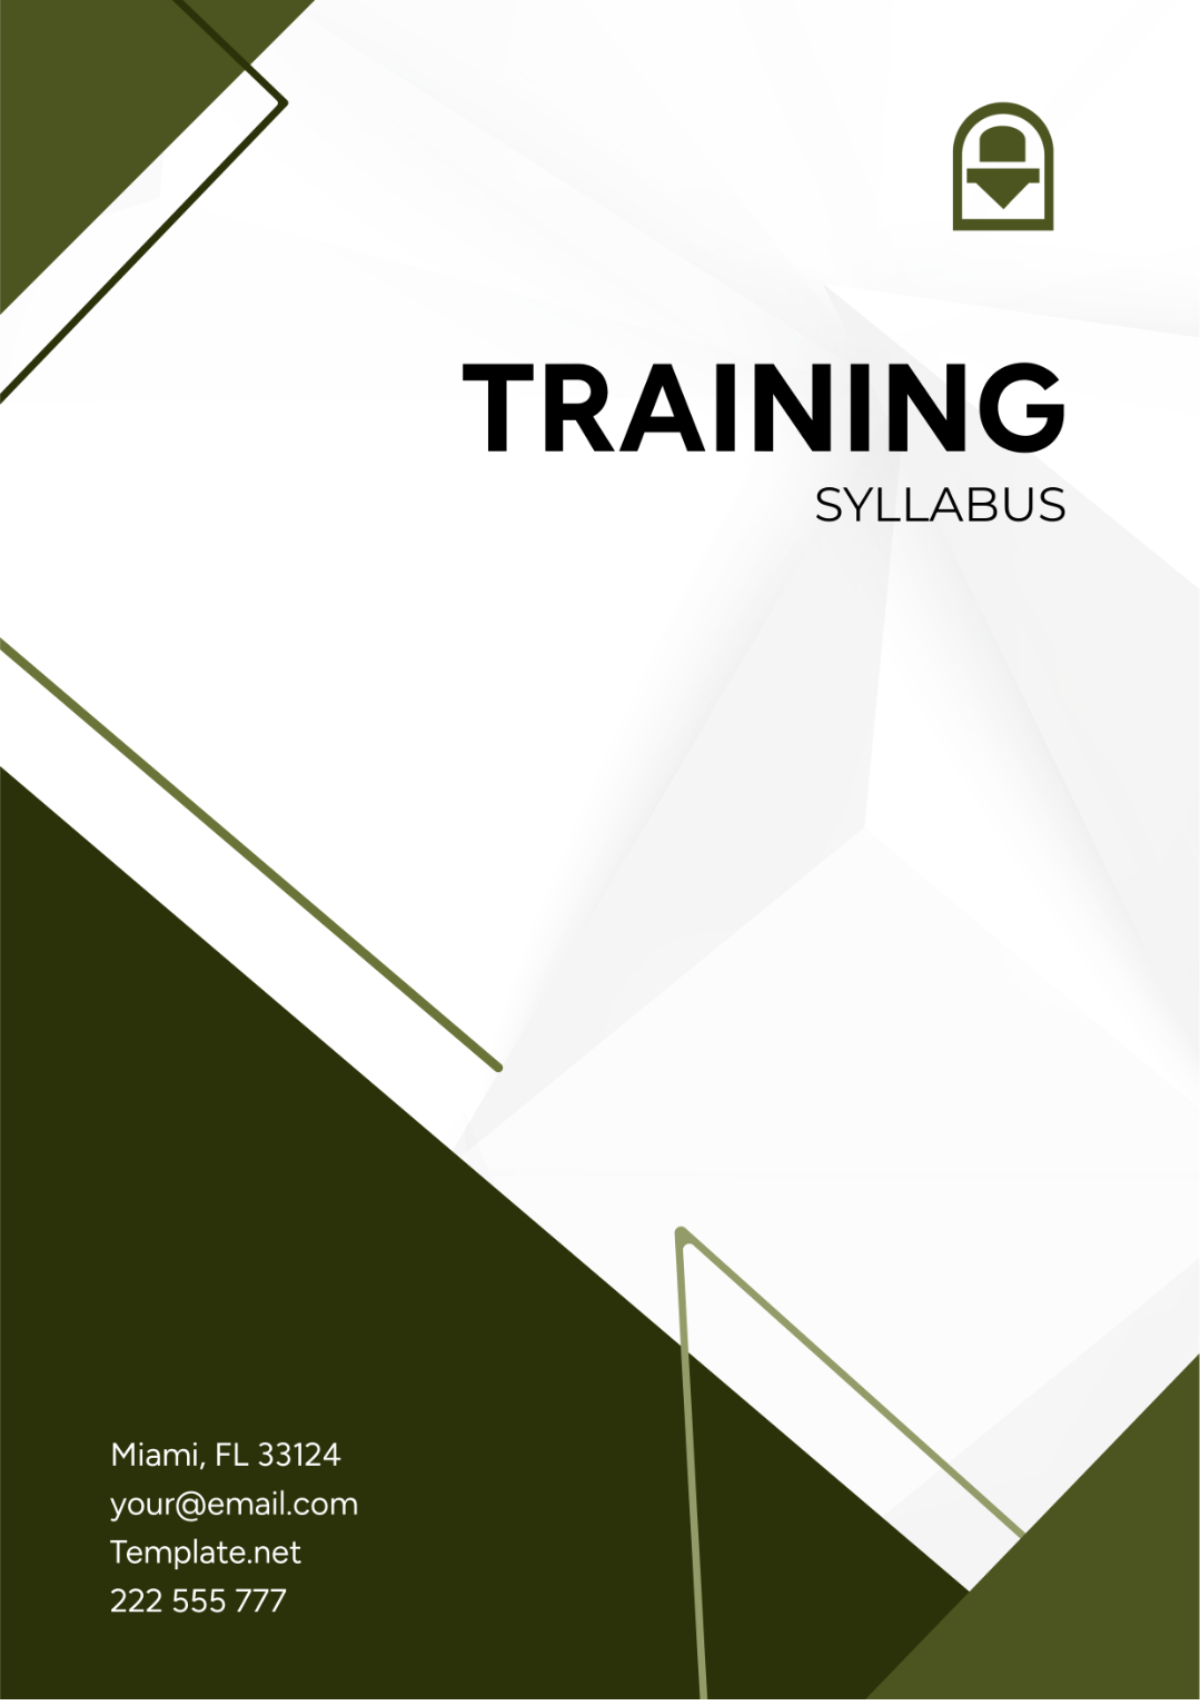 Training Syllabus Template